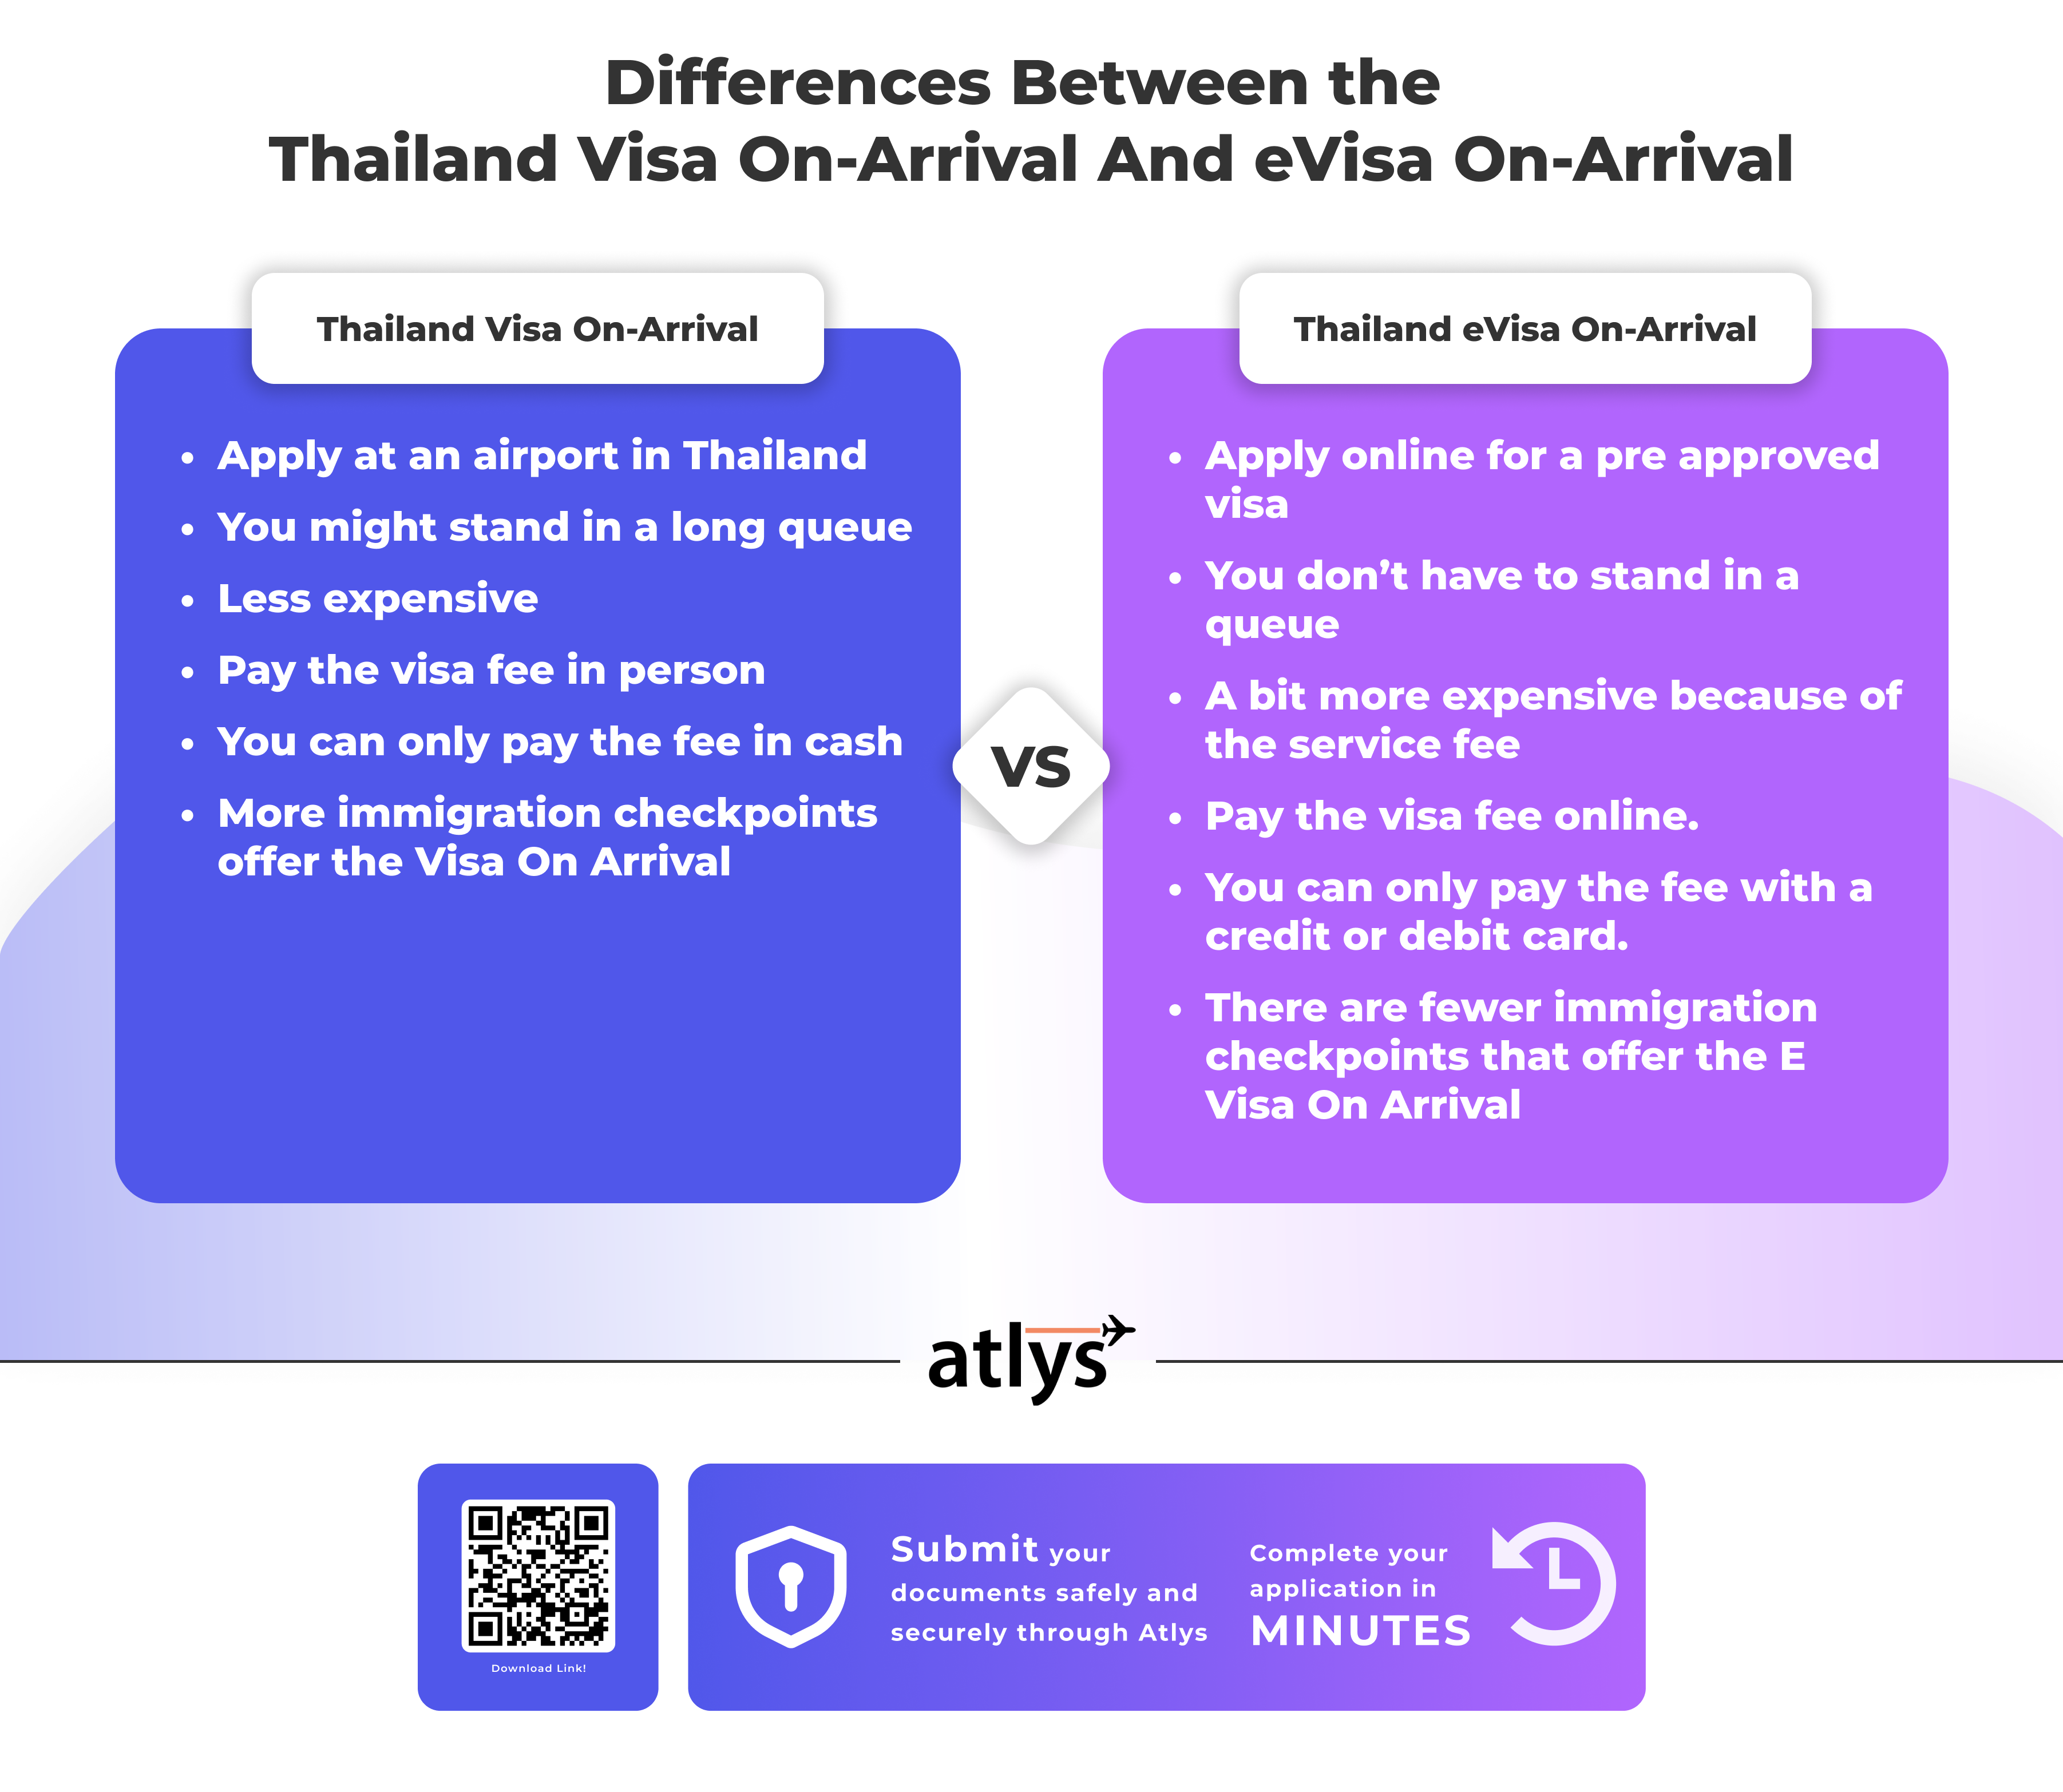 Thai EVOA vs VOA key differences between the two visas